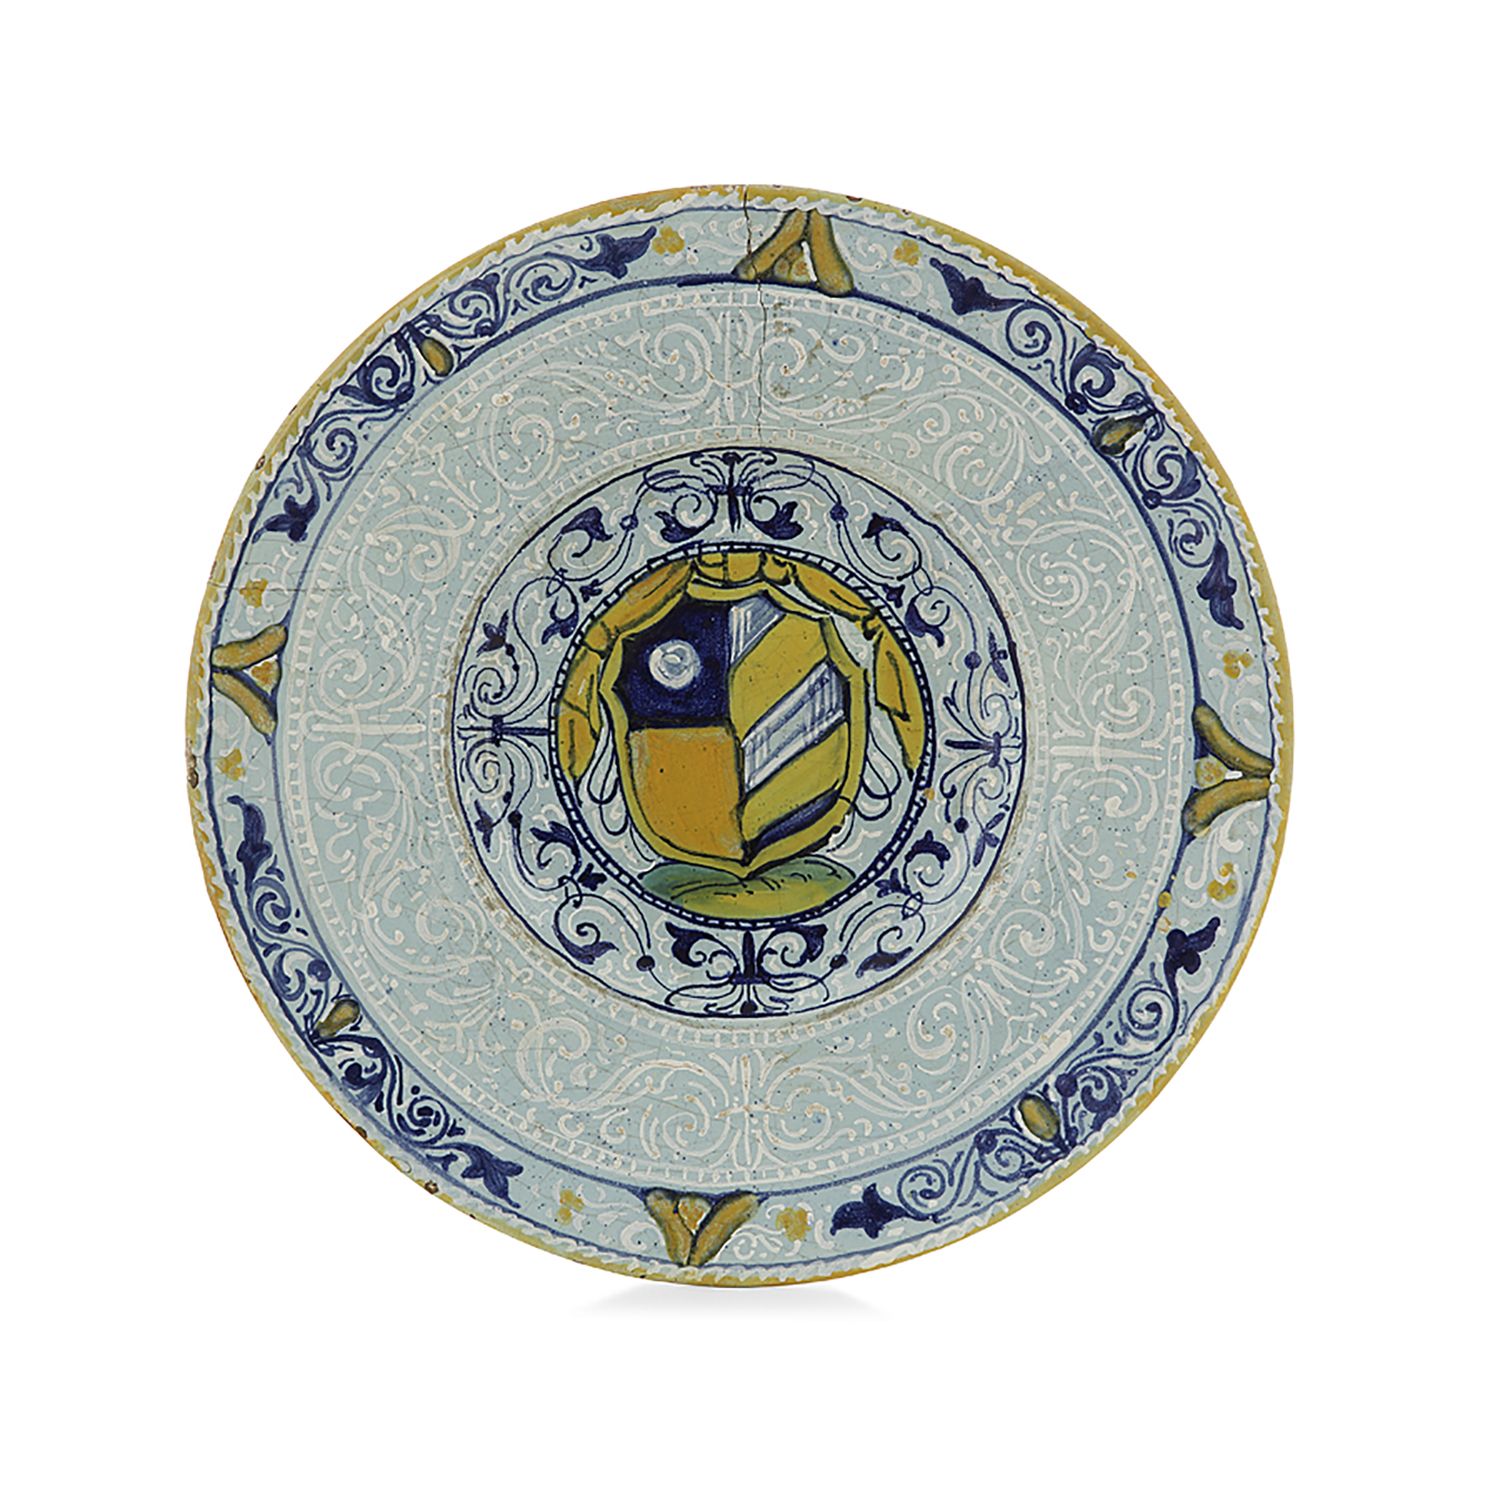 Null 小圆盘，意大利，16世纪风格

马乔利卡，多色装饰，在贝雷蒂诺的背景上有一个徽章的纹章，装饰有黑底白字的叶子。

(裂缝)

一个圆形的意大利盘子，以&hellip;